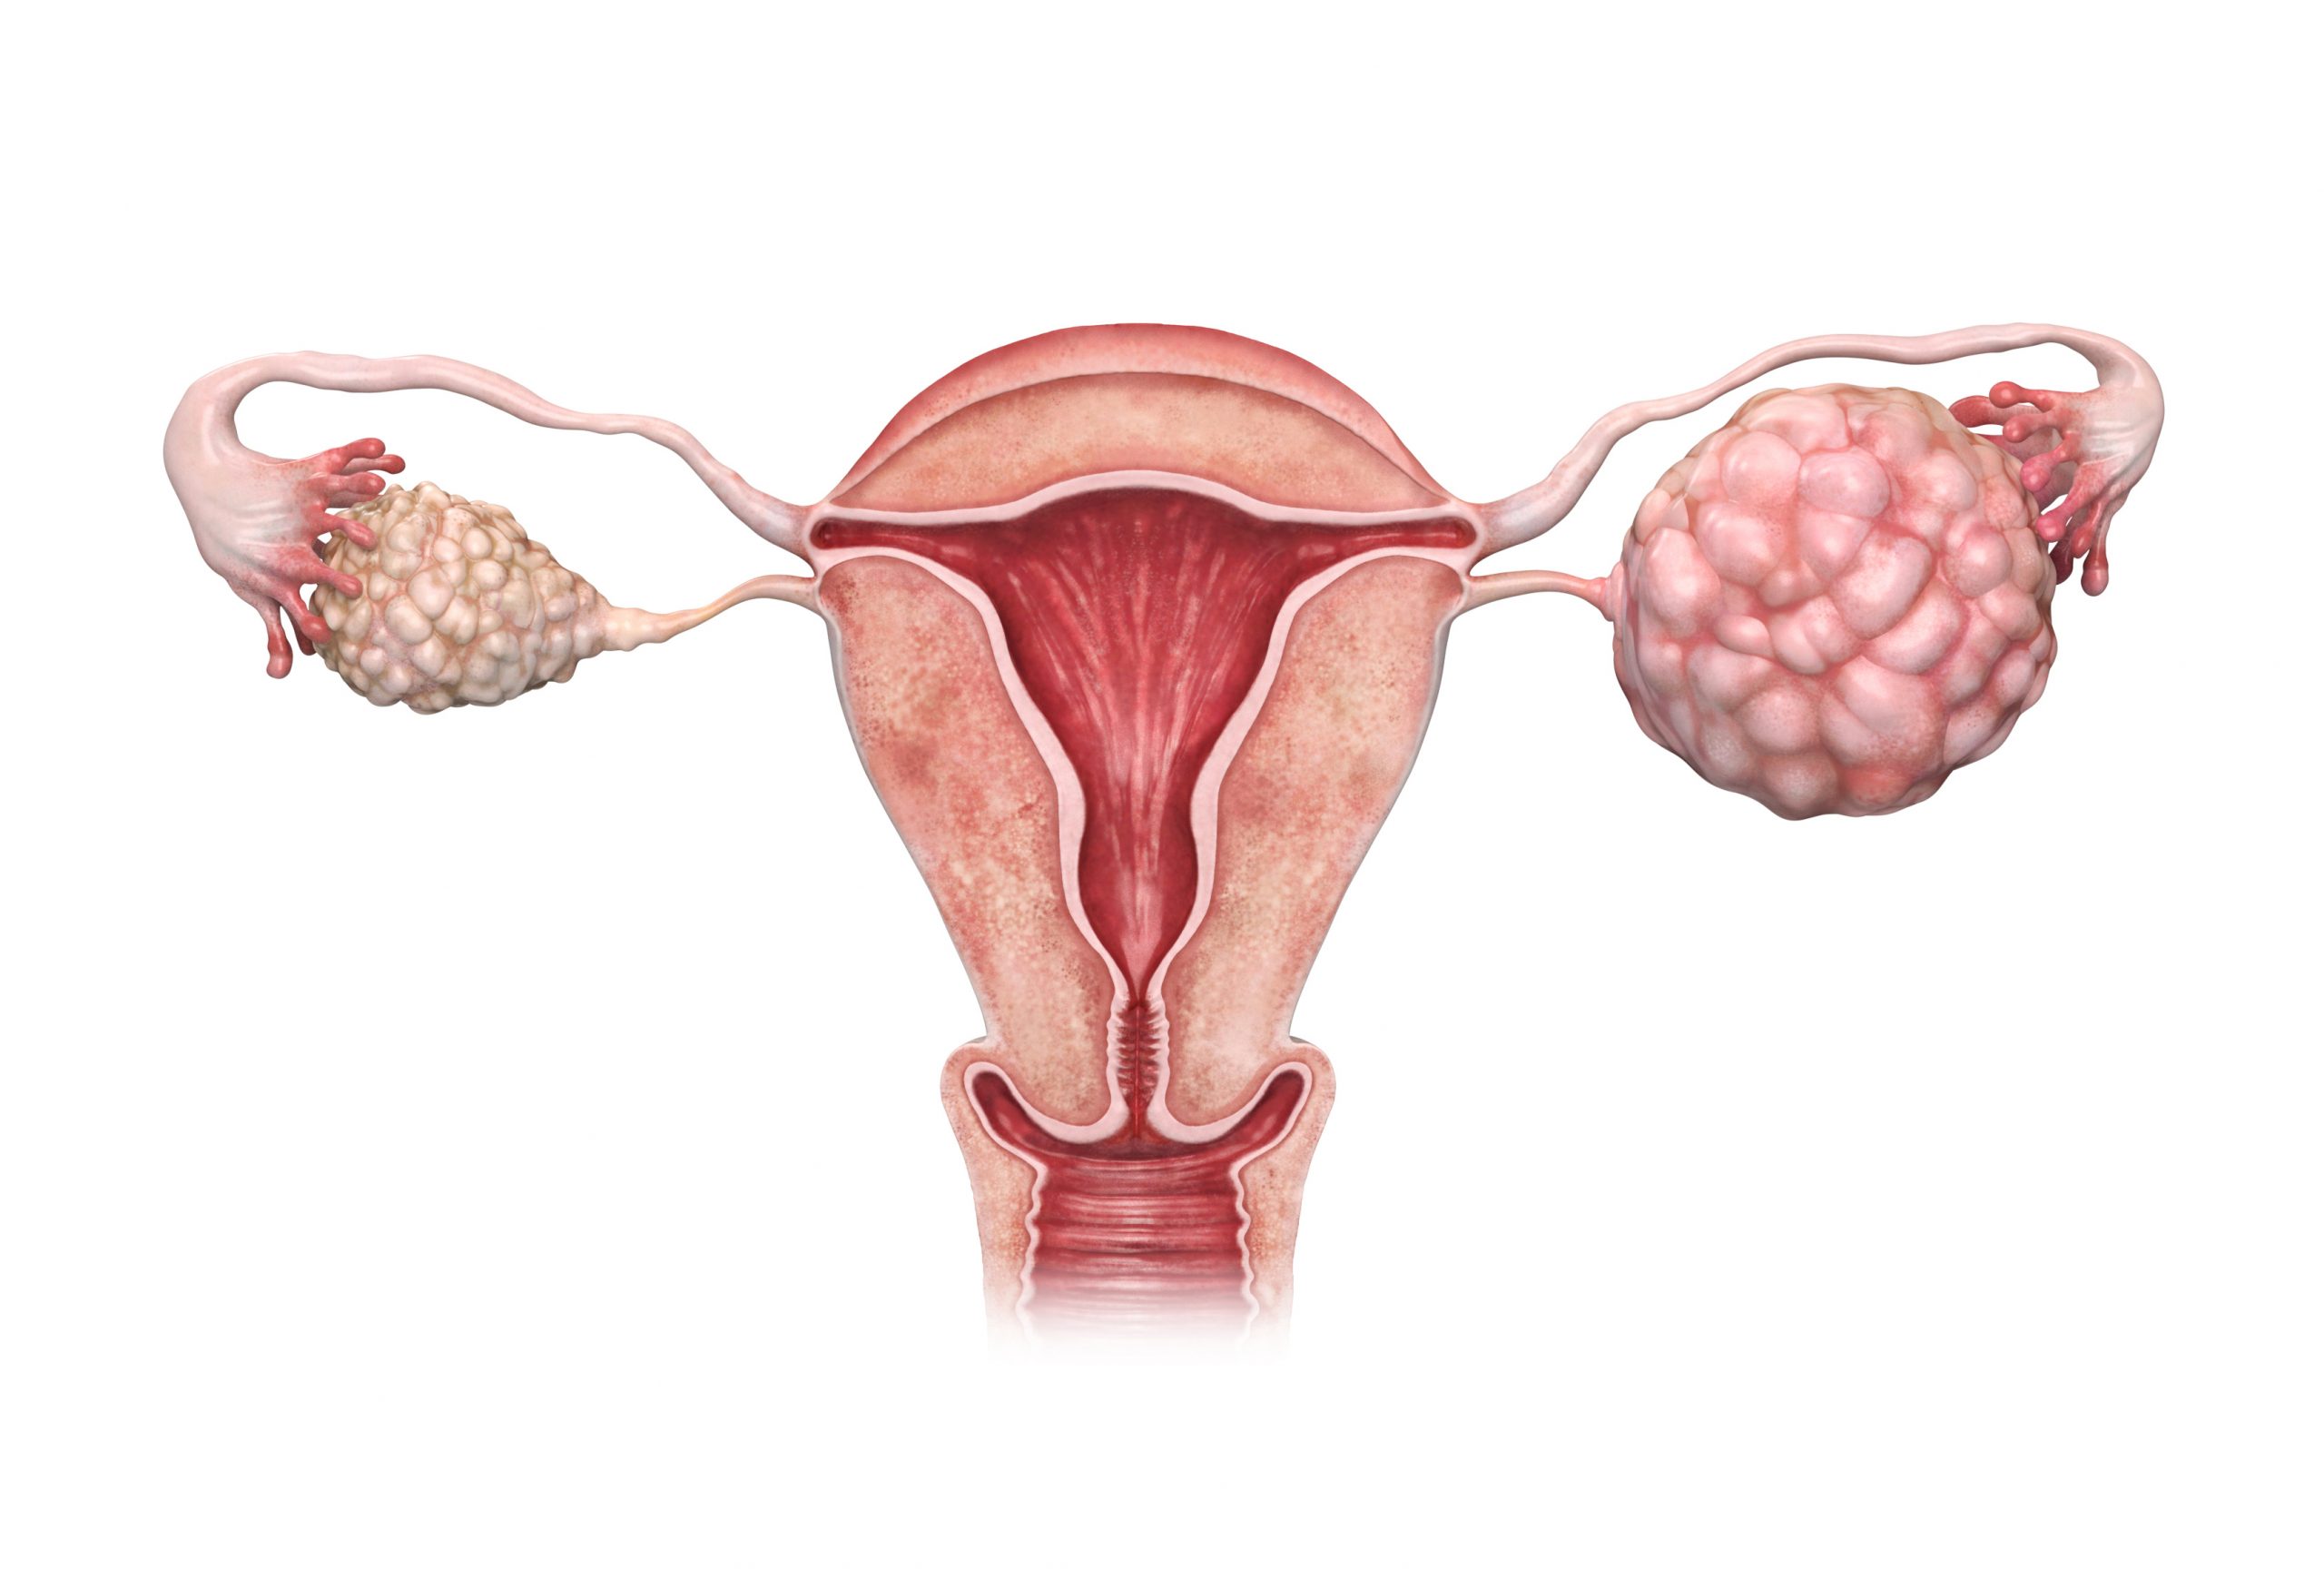 Ovarian cancer: symptoms, diagnosis, treatment